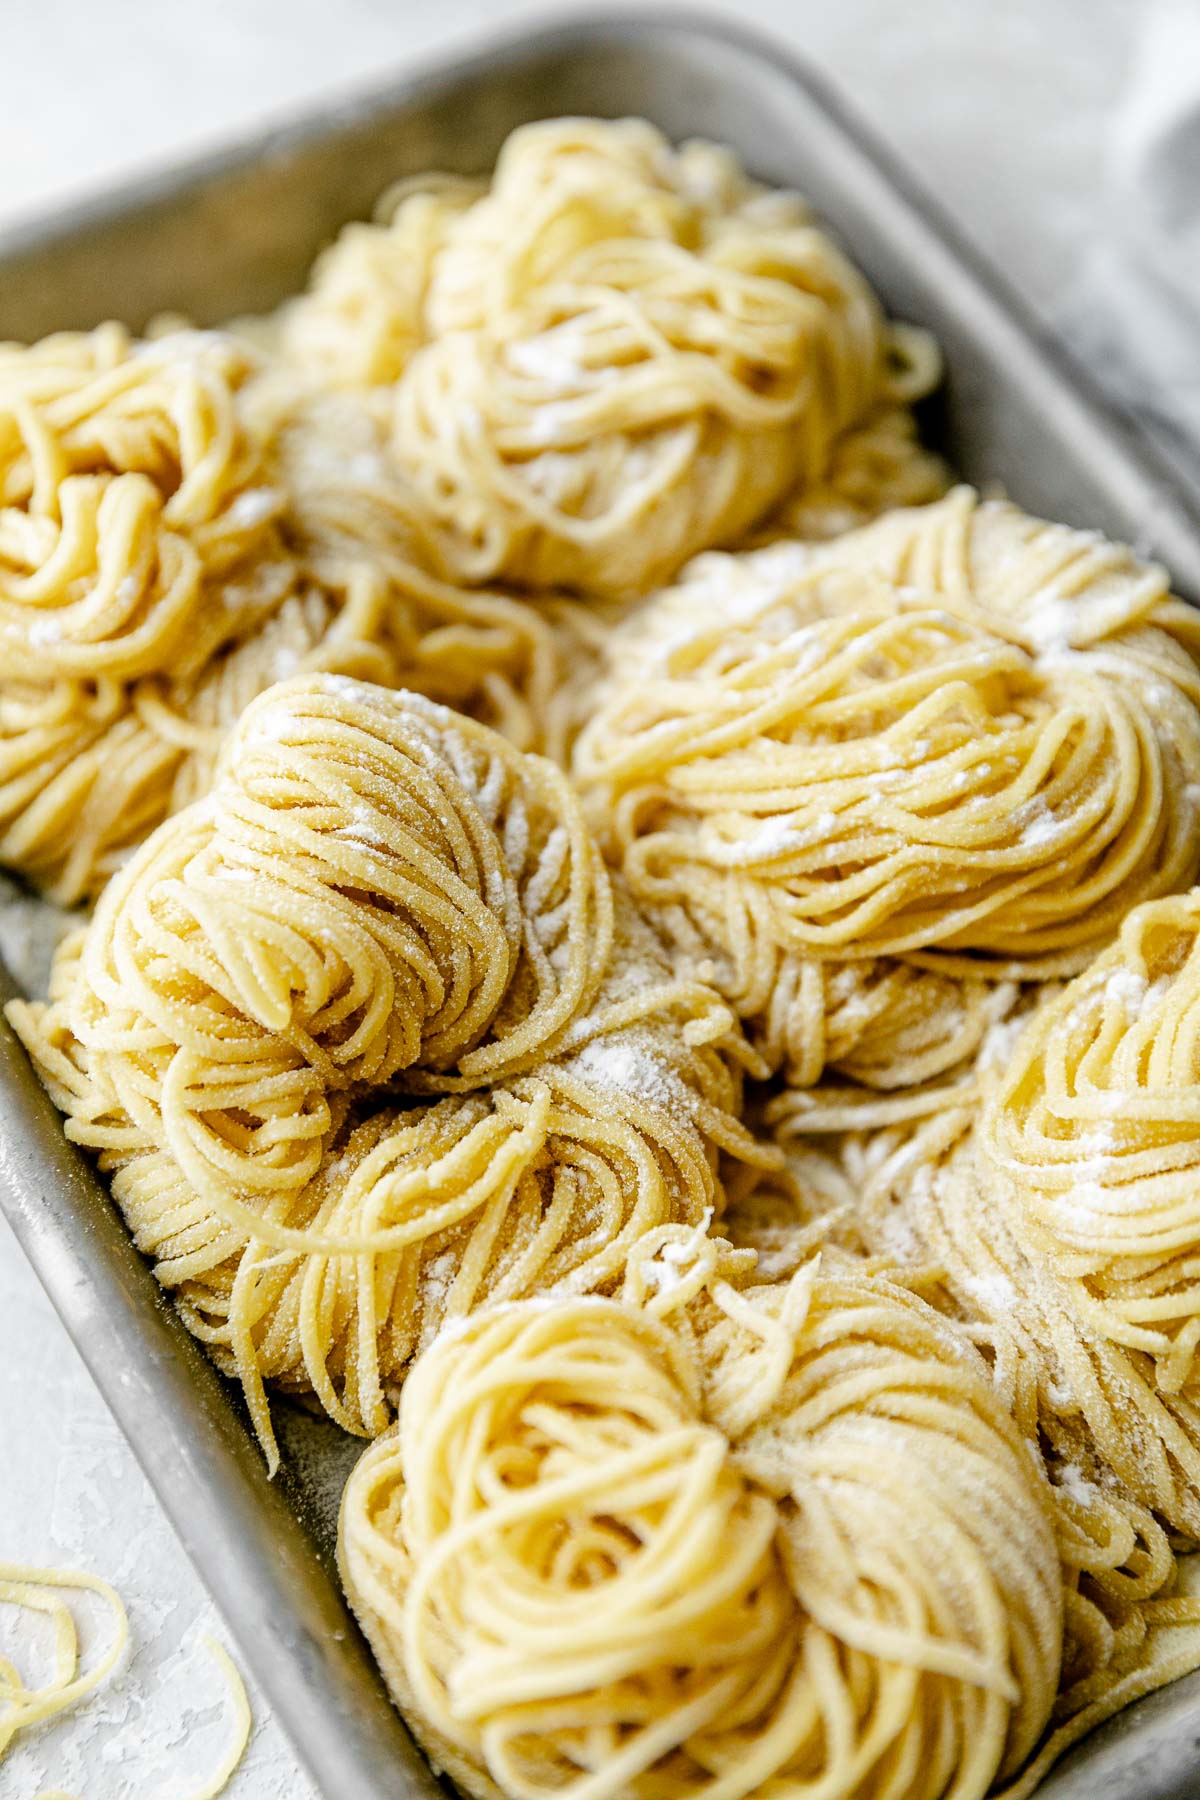 https://playswellwithbutter.com/wp-content/uploads/2021/10/How-to-Make-Homemade-Pasta-Fresh-Pasta-Recipe-64.jpg